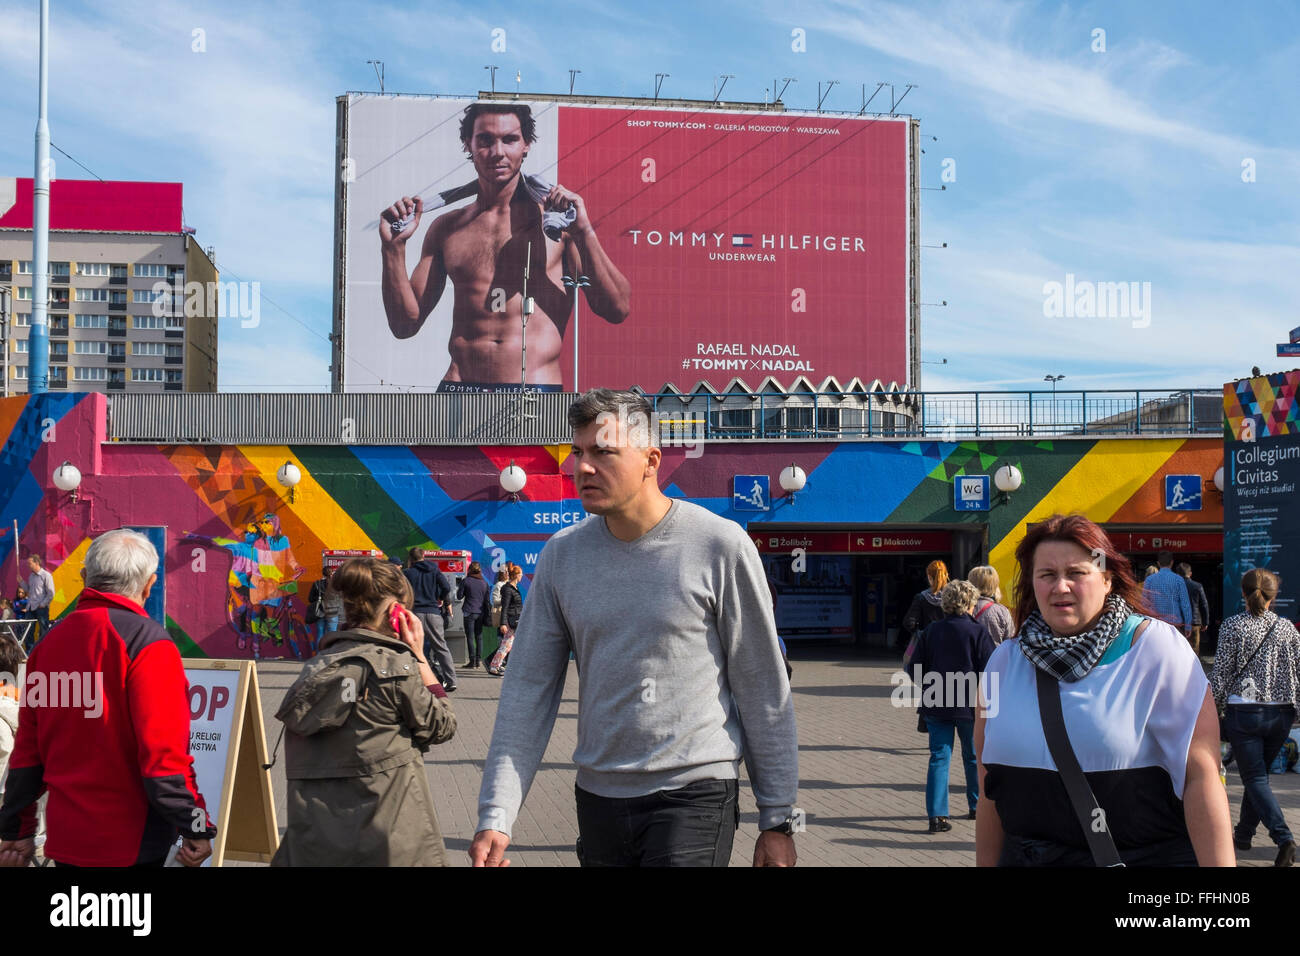 Rafael Nadal on Tommy Hilfiger billboard in central Warsaw, Poland Stock  Photo - Alamy